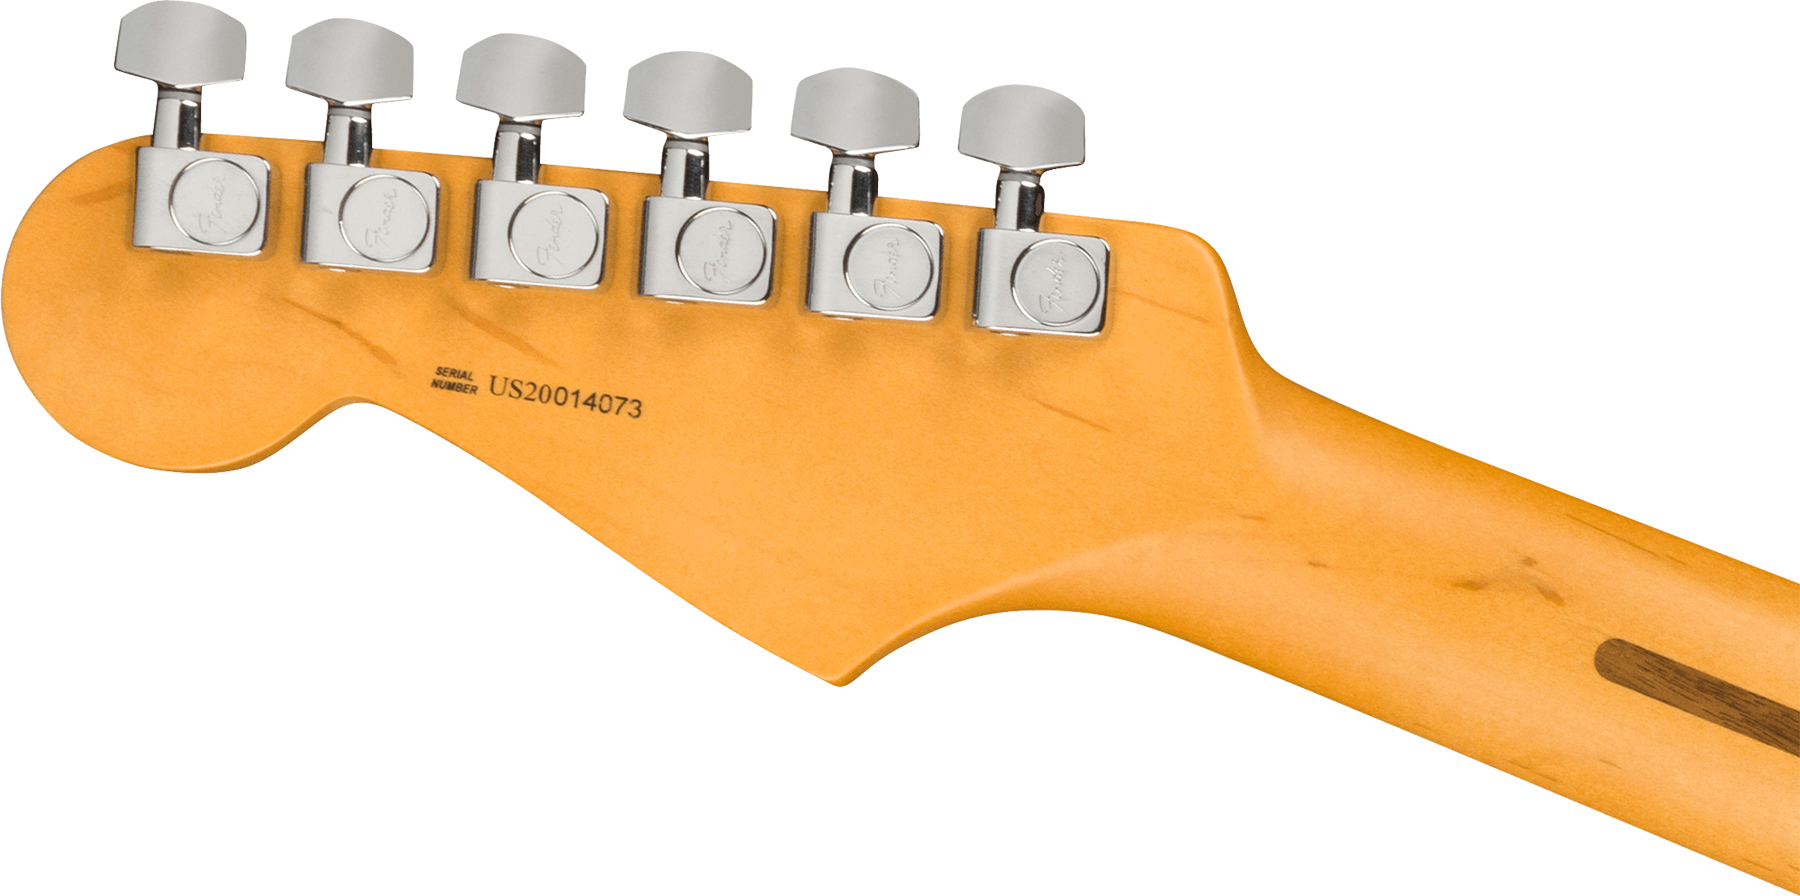 Fender Strat American Professional Ii Usa Rw - 3-color Sunburst - Str shape electric guitar - Variation 3